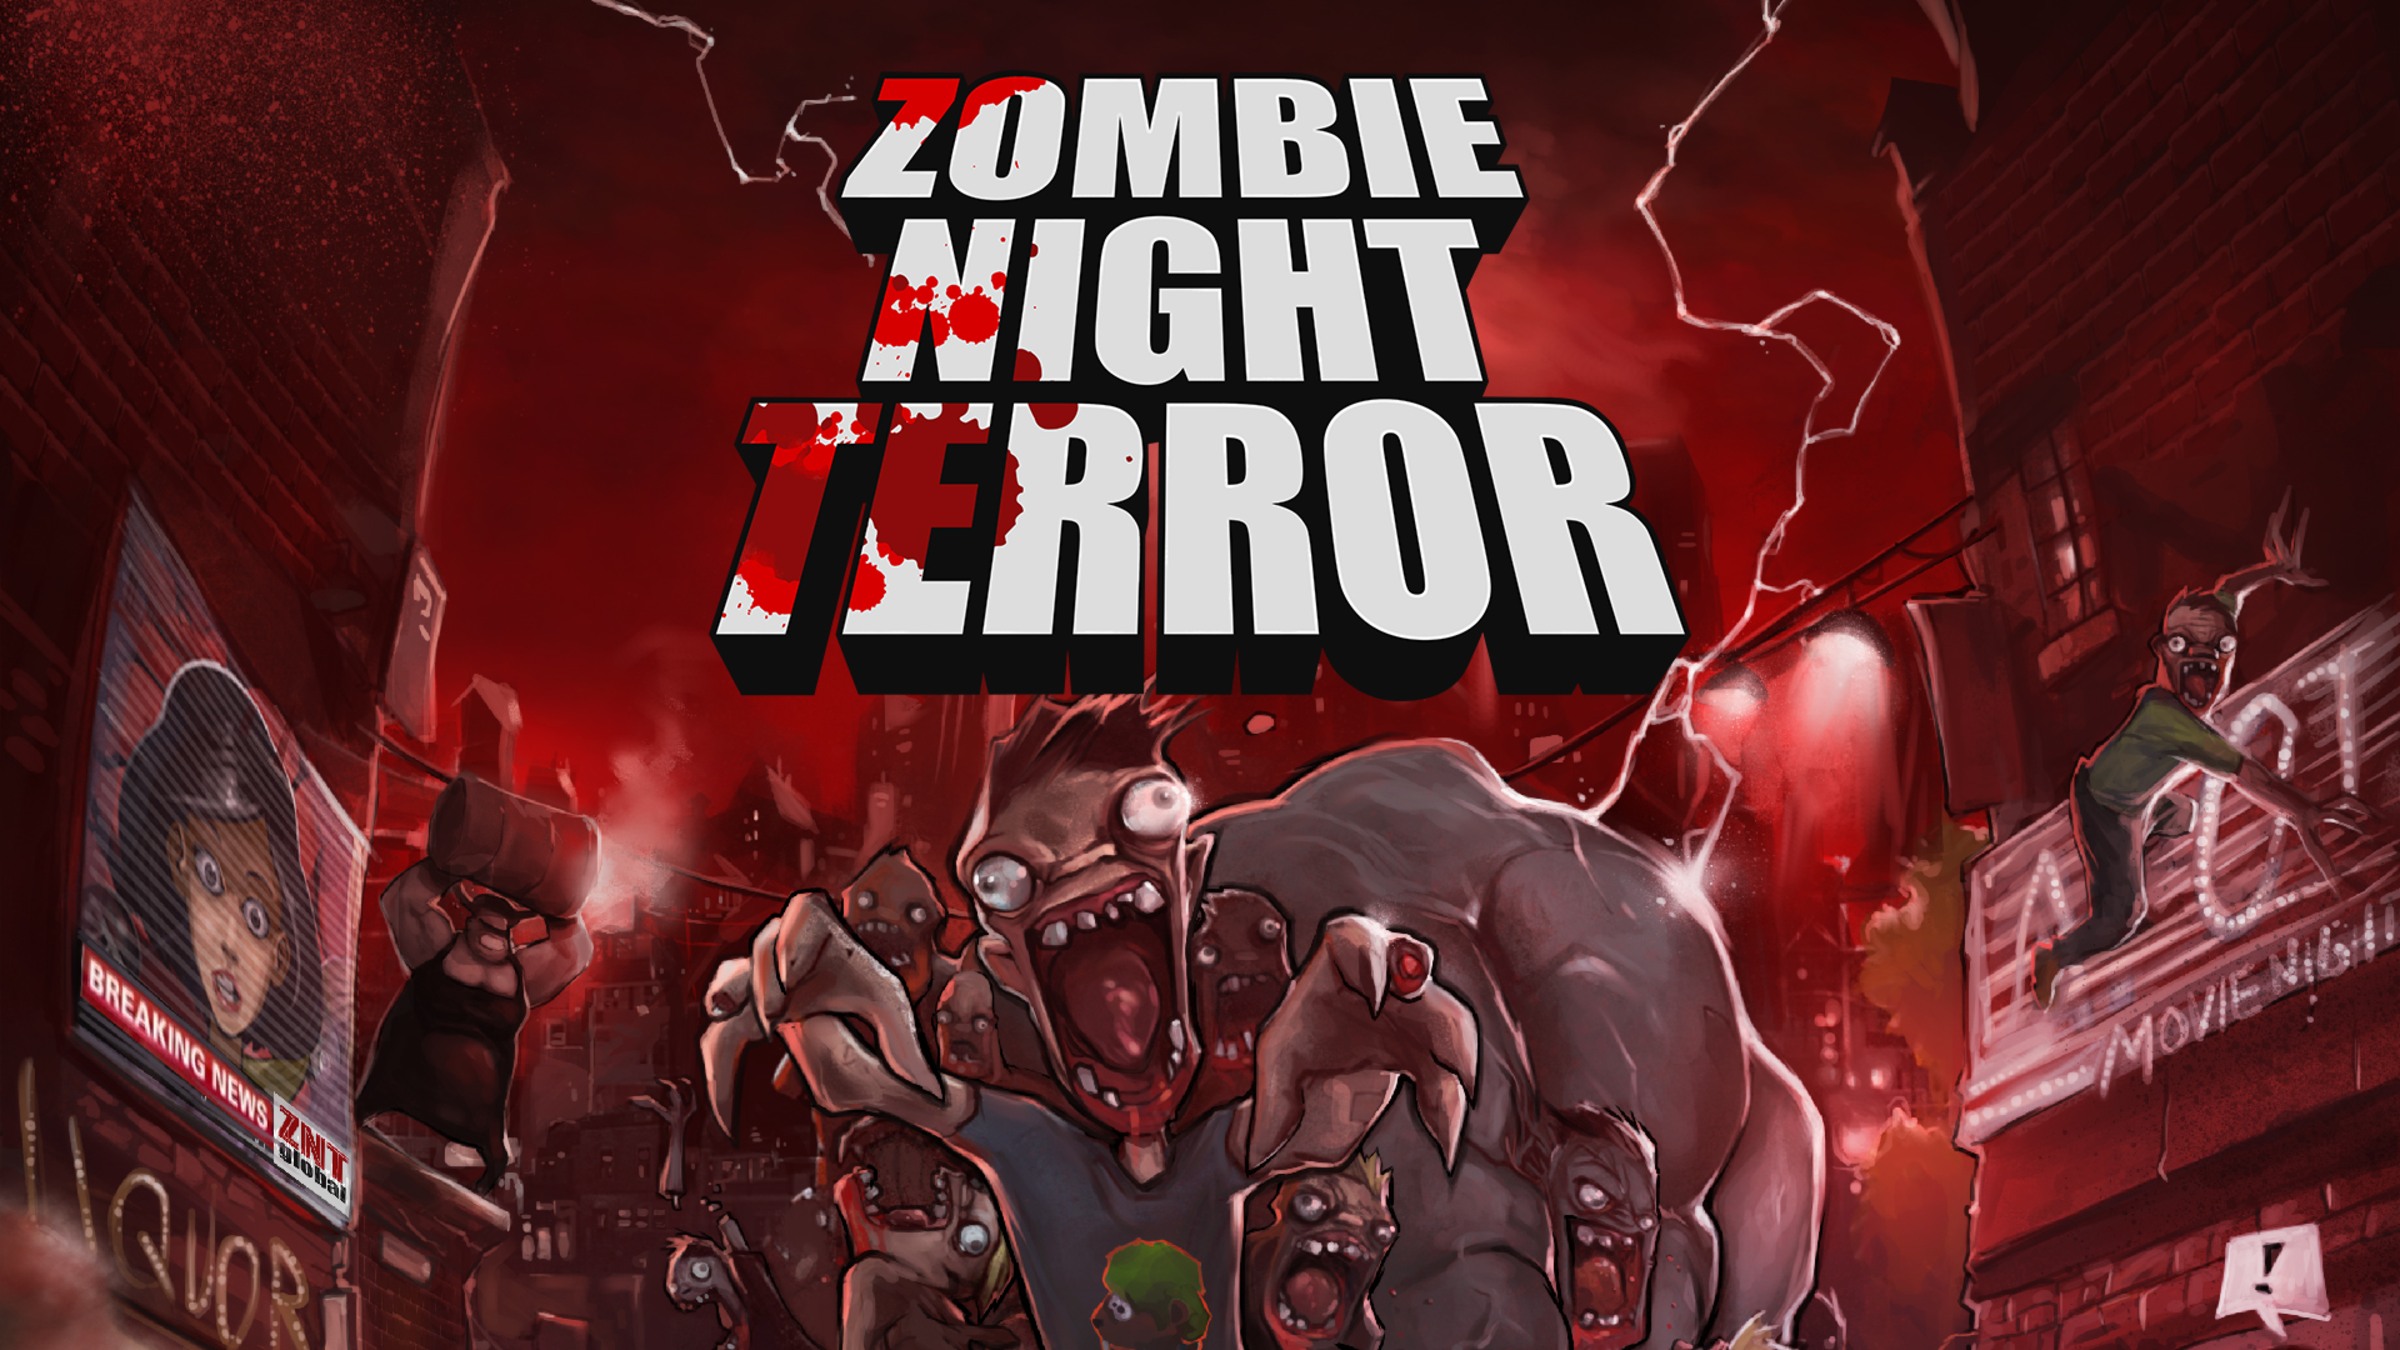 Zombie Night Terror (PC) mostra o outro lado de uma epidemia zumbi